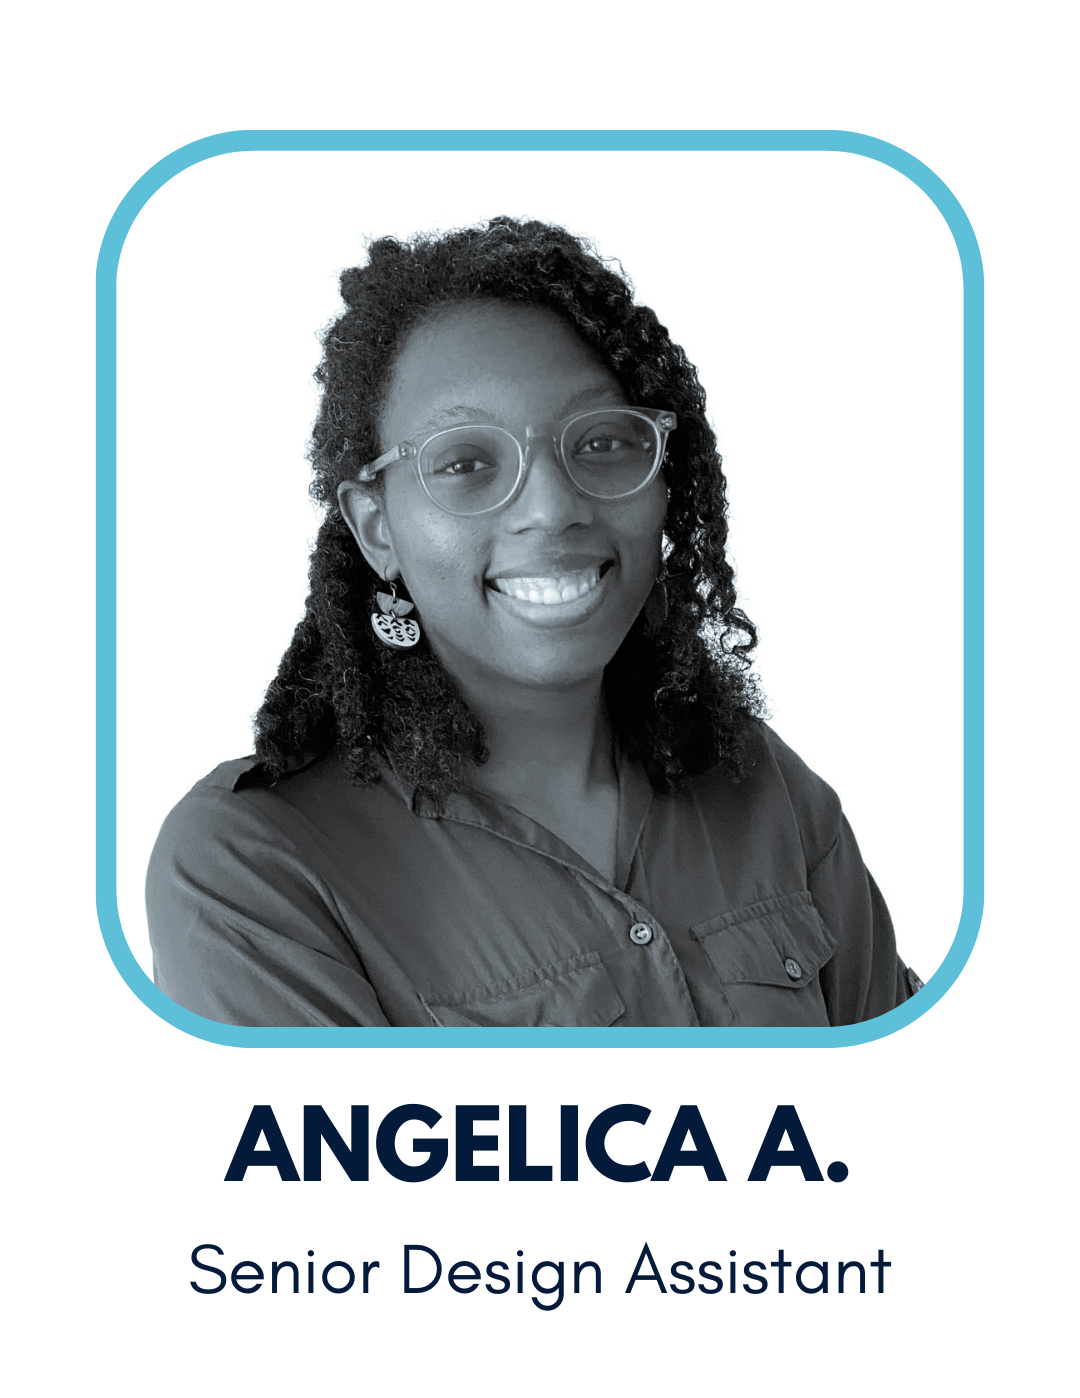 Angelica A., Senior Design Assistant at 4Dbiz.